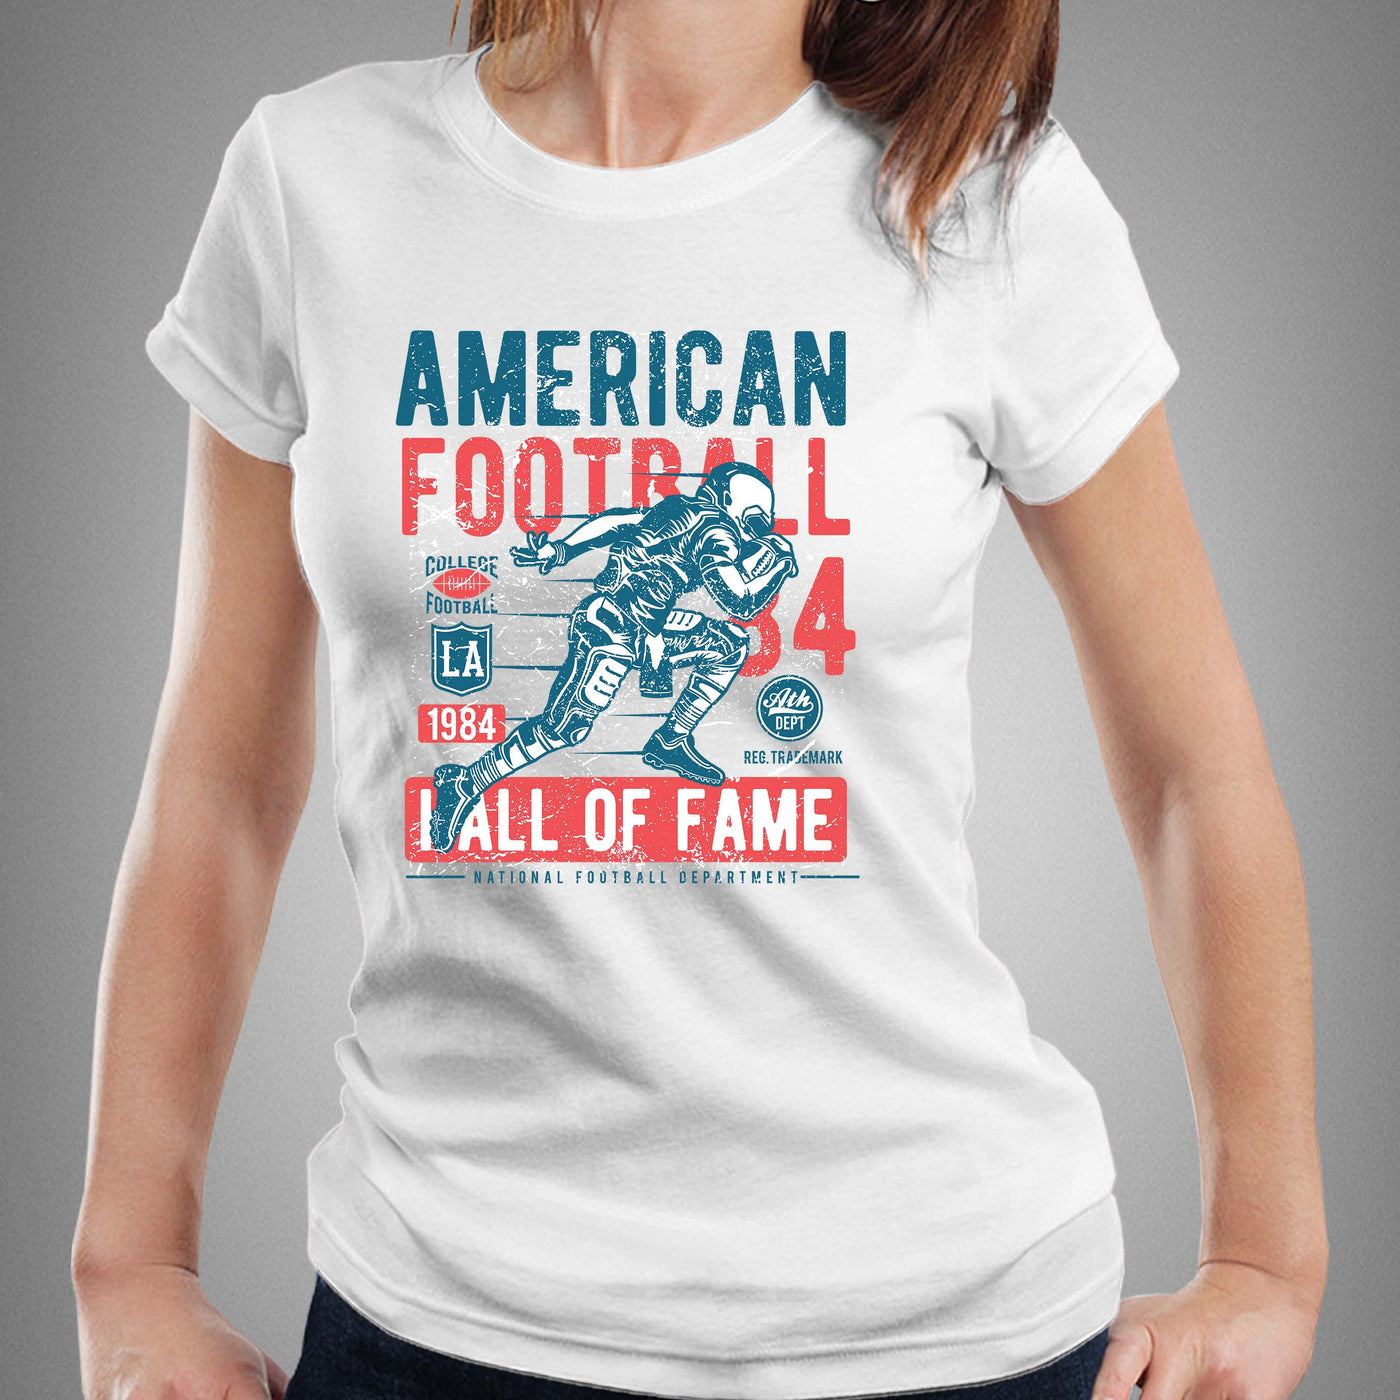 American Football - Fem